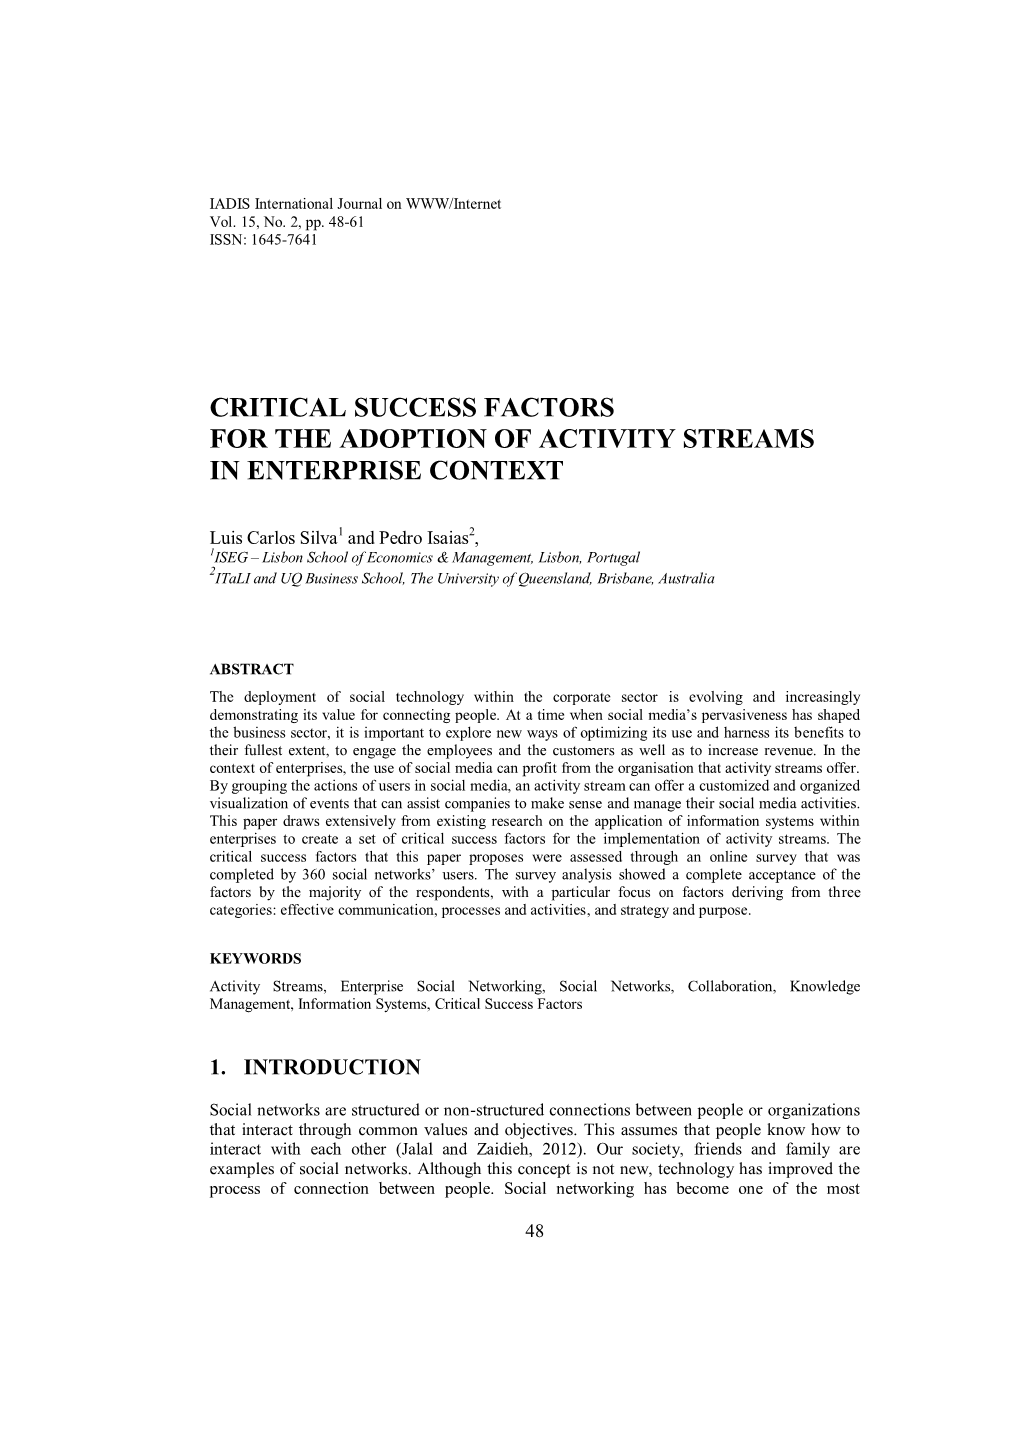 Critical Success Factors for the Adoption of Activity Streams in Enterprise Context